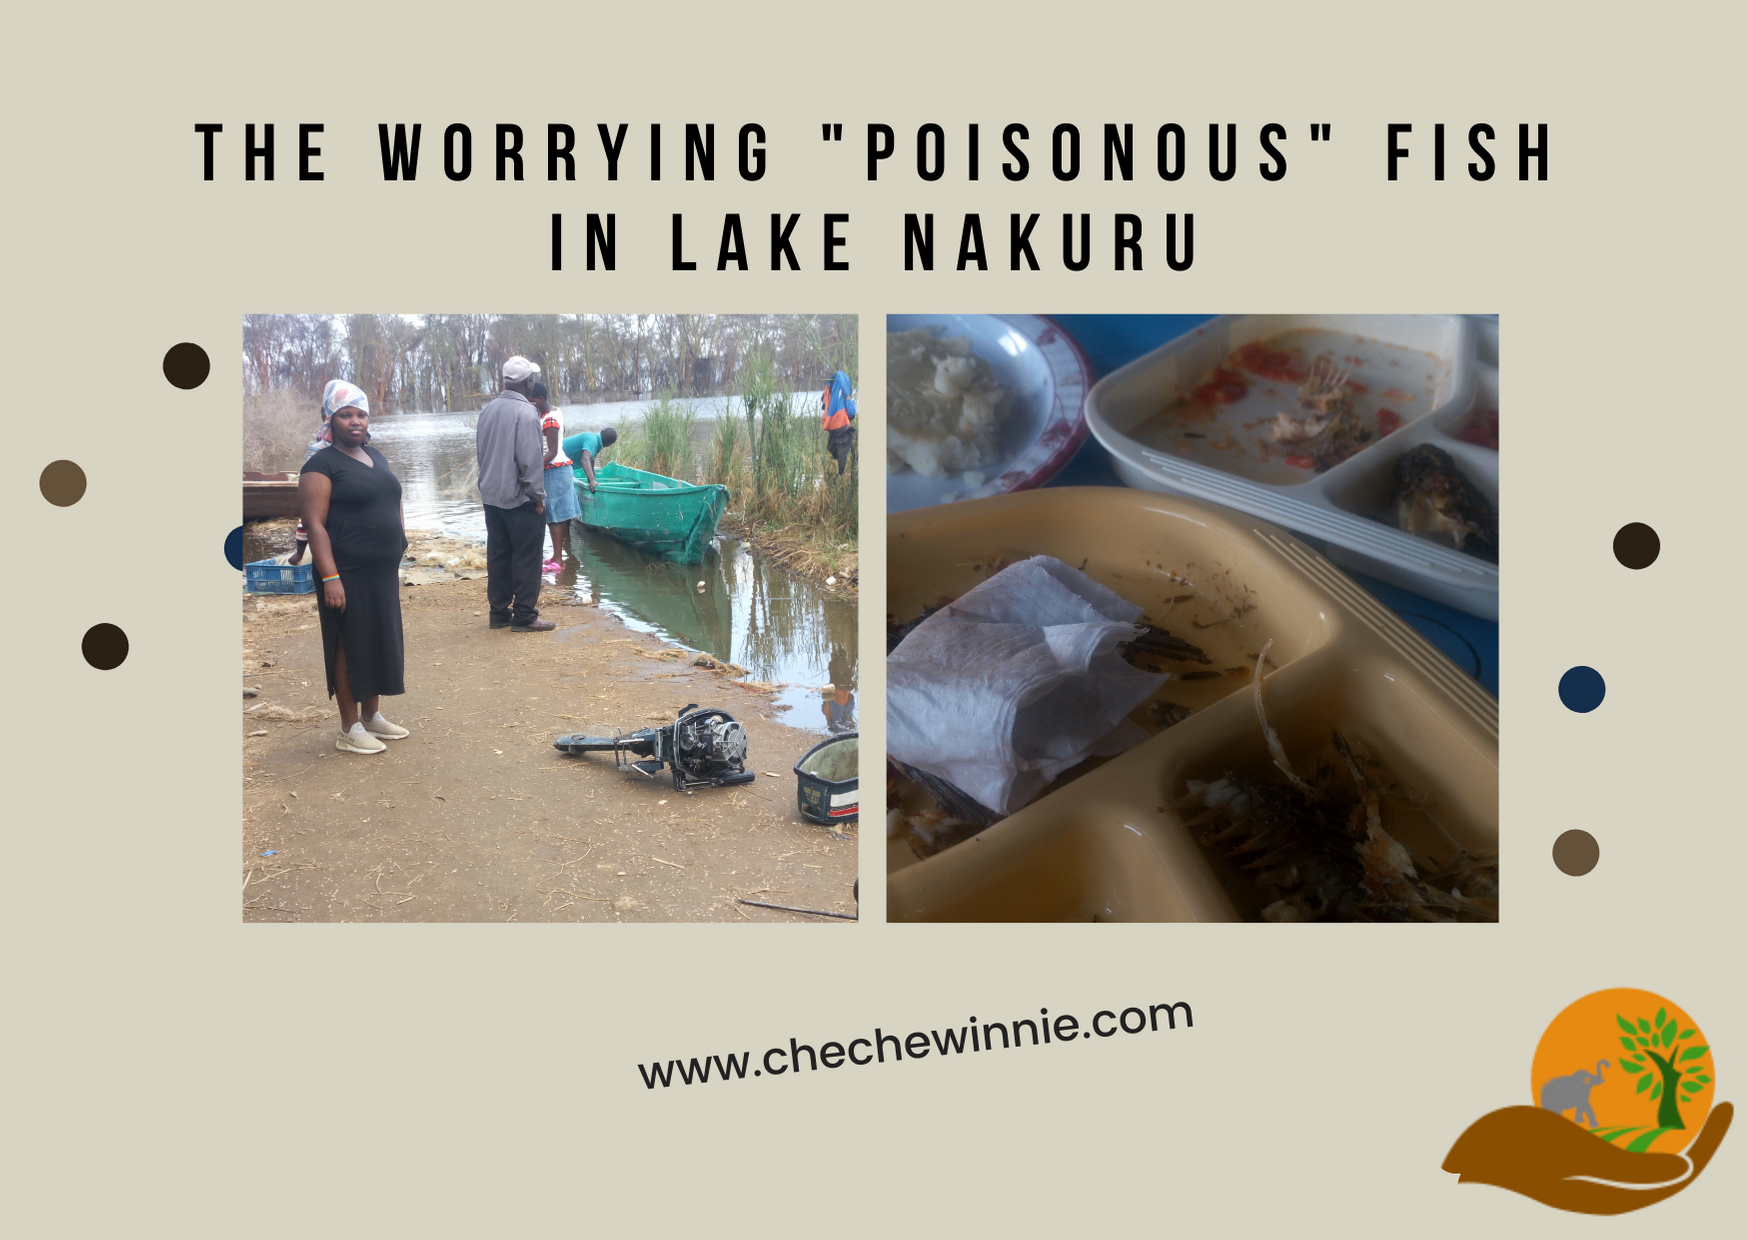 The worrying Poisonous fish in Lake Nakuru